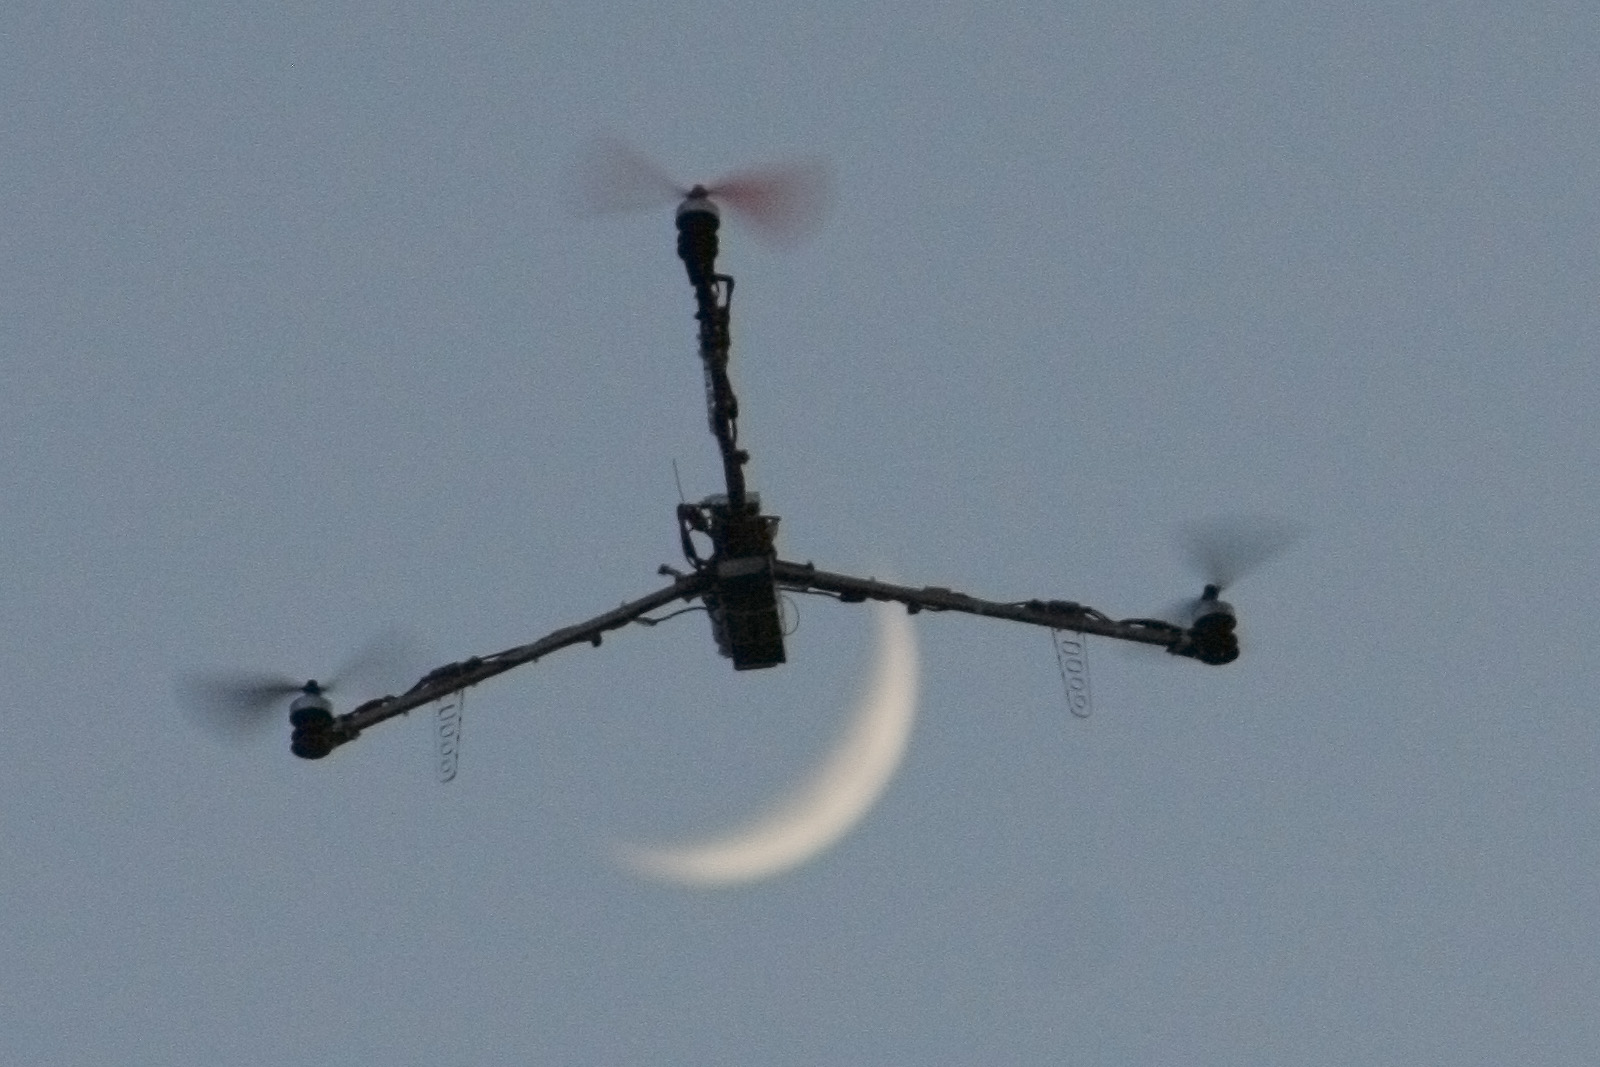 File:Tricopter-FPV-Moon.jpg